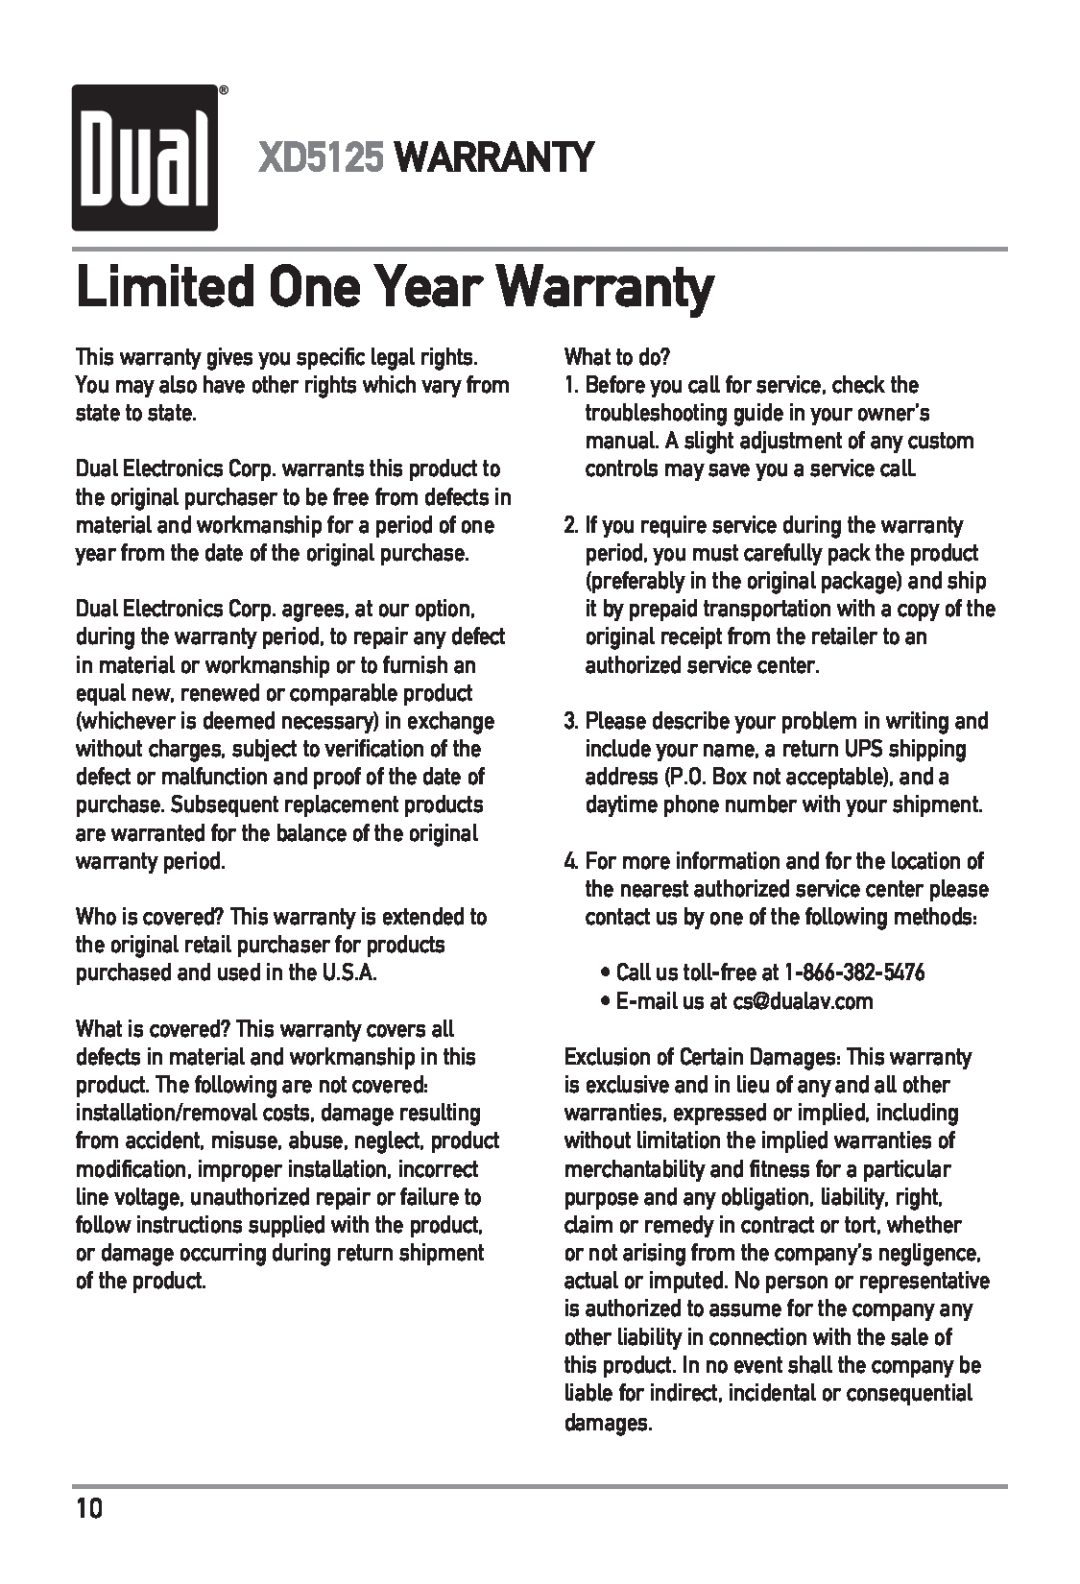 Dual owner manual Limited One Year Warranty, XD5125 WARRANTY 